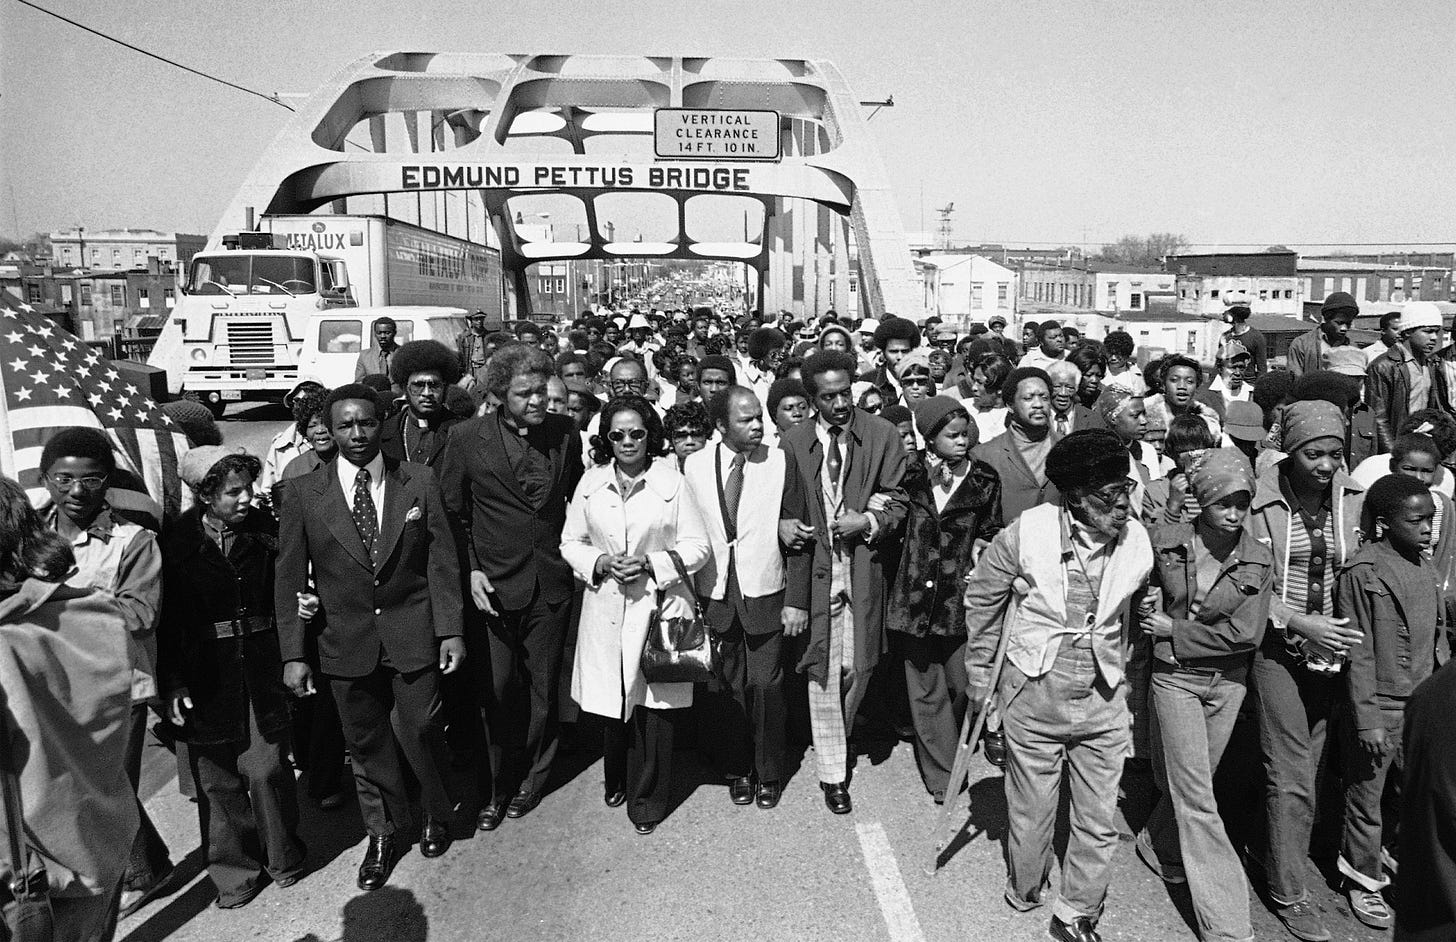 John Lewis Edmund Pettus Bridge civil rights march